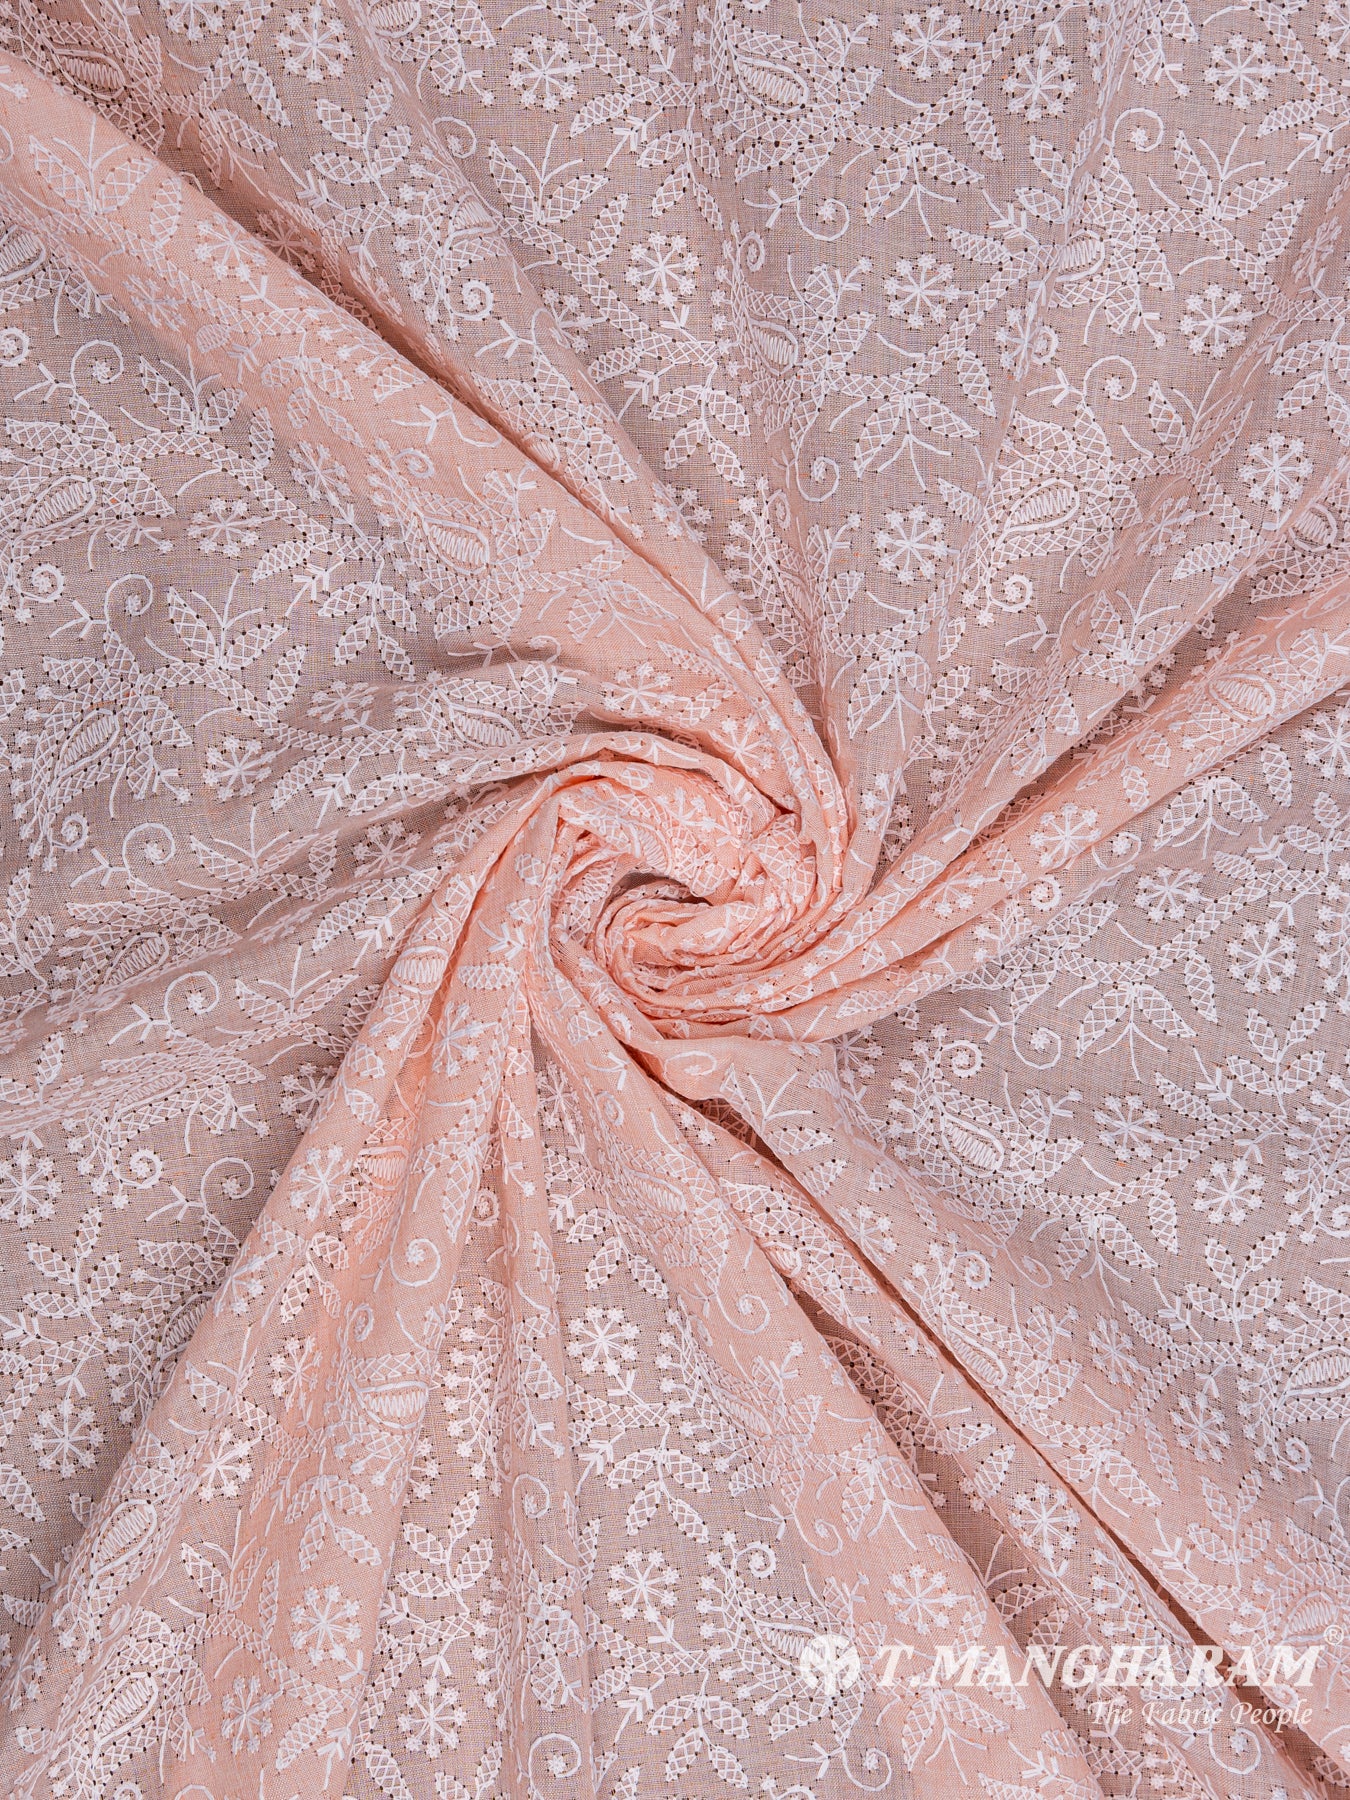 Peach Cotton Embroidery Fabric - EB4807 view-1